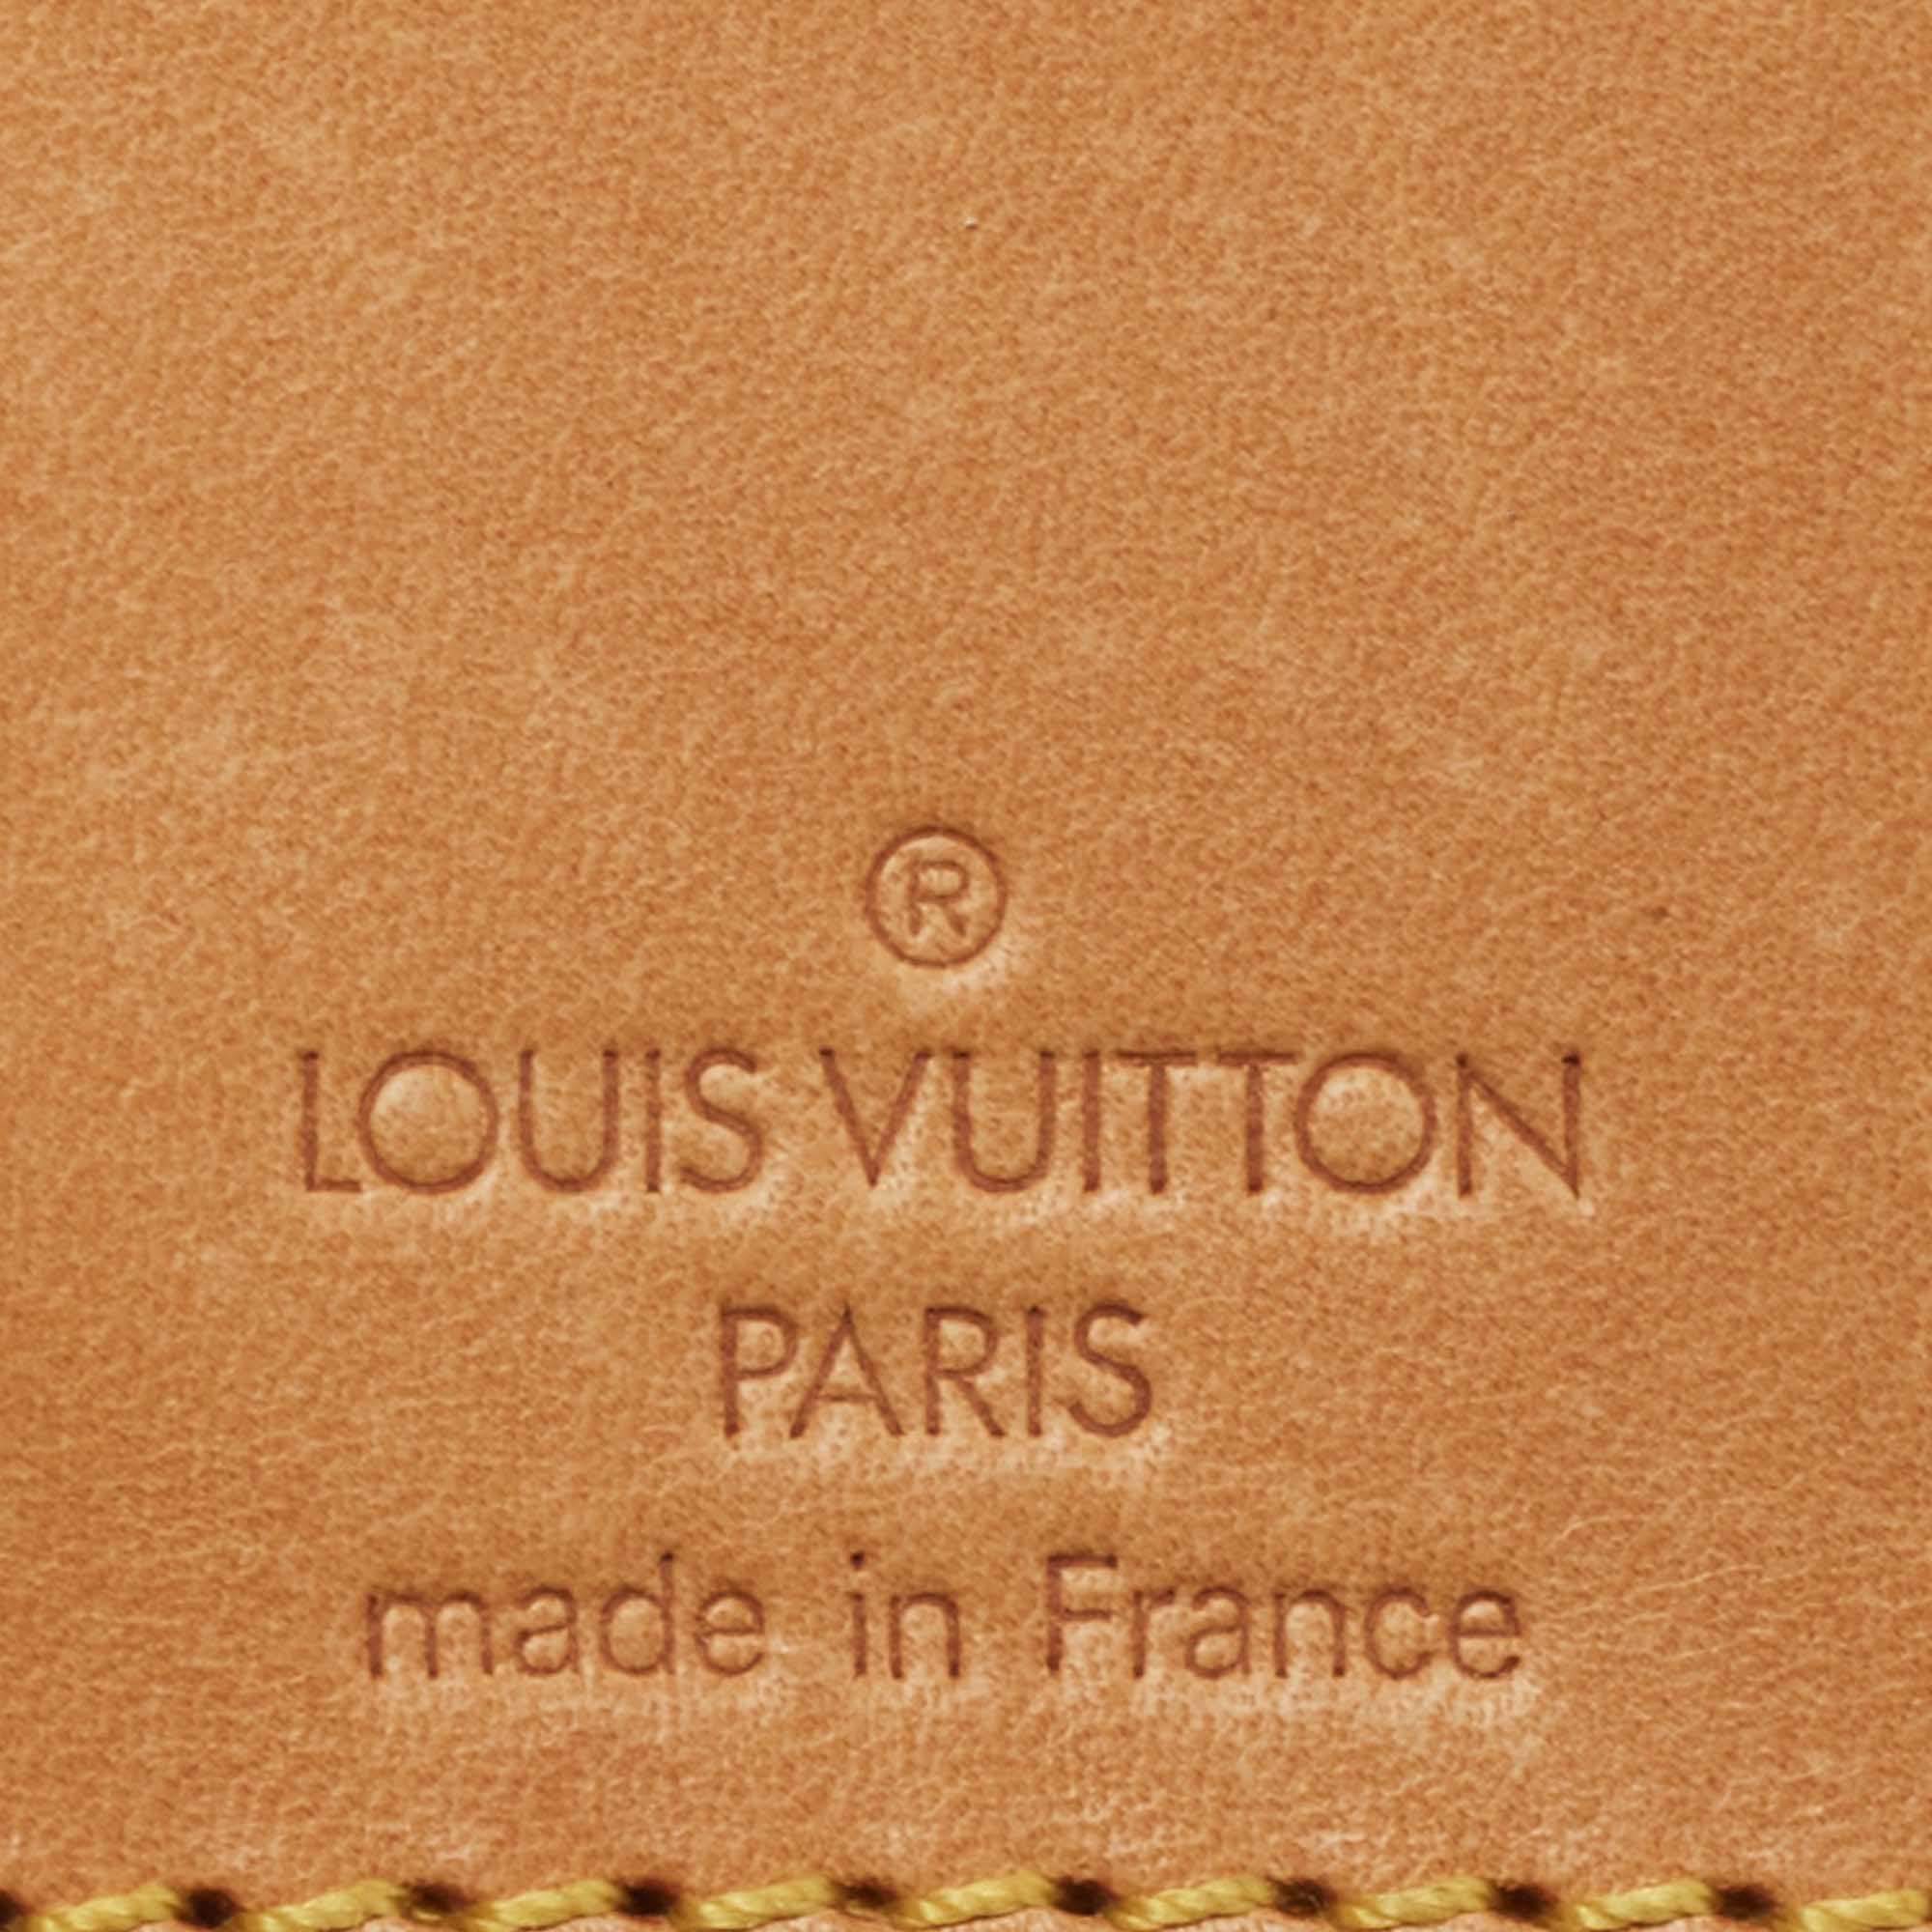 Louis Vuitton Vachetta Leather Luggage ID Tag Name Tag 10610 